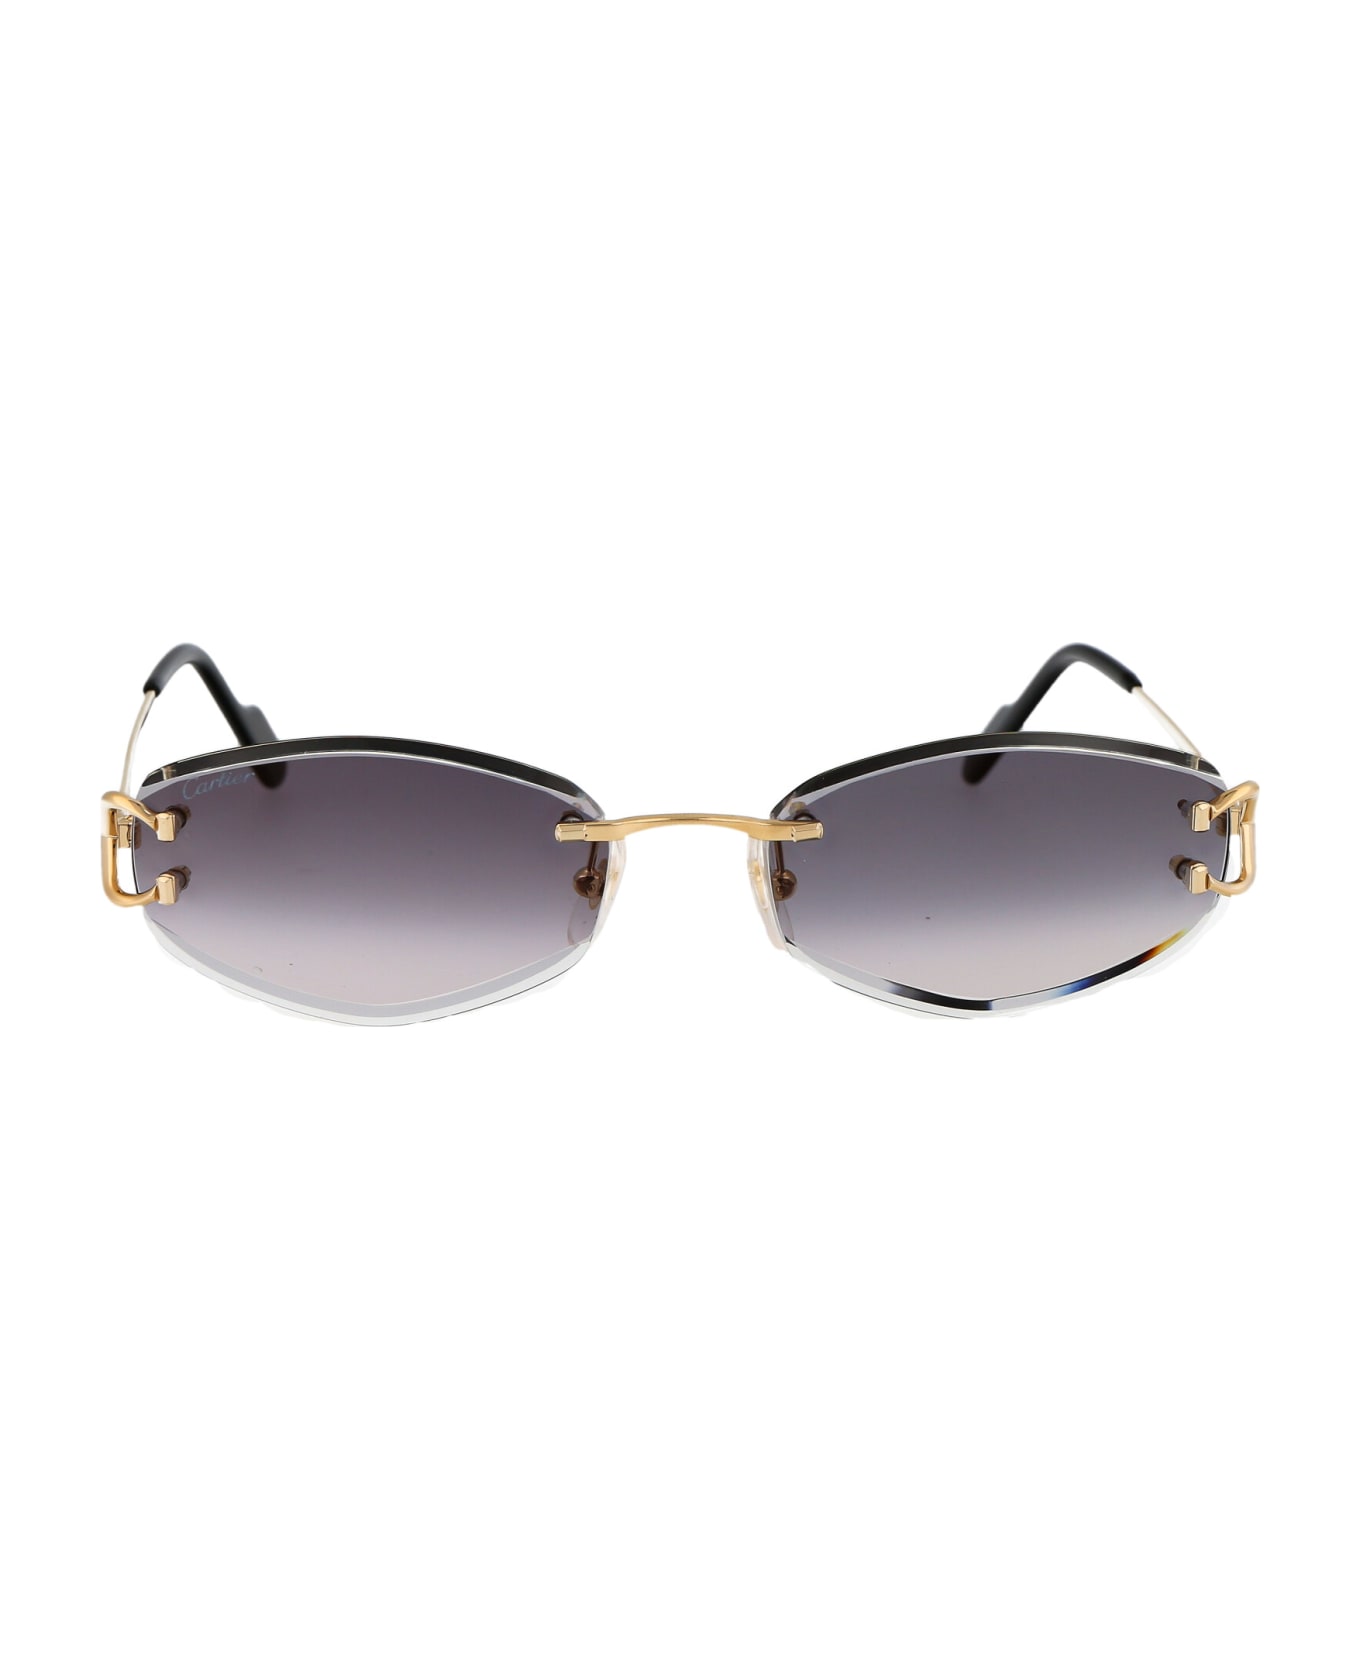 Cartier Eyewear Ct0467s Sunglasses - 001 GOLD GOLD GREY